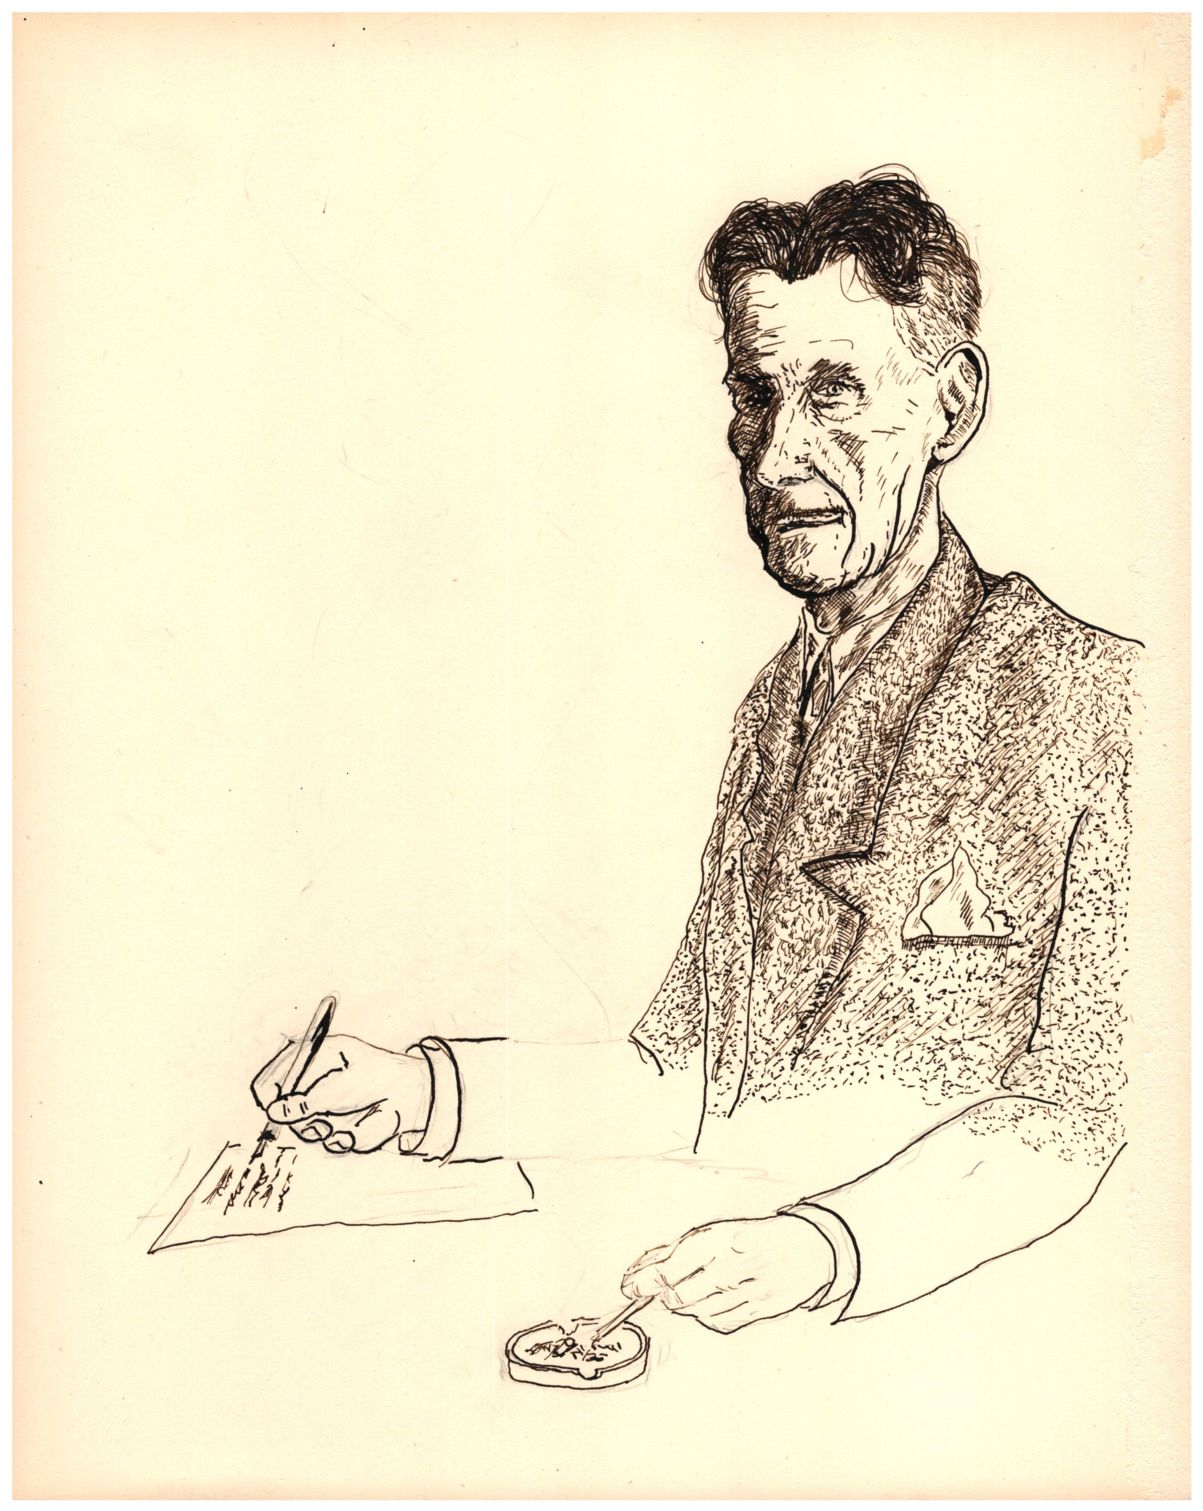 George Orwell writes by David Atkinson